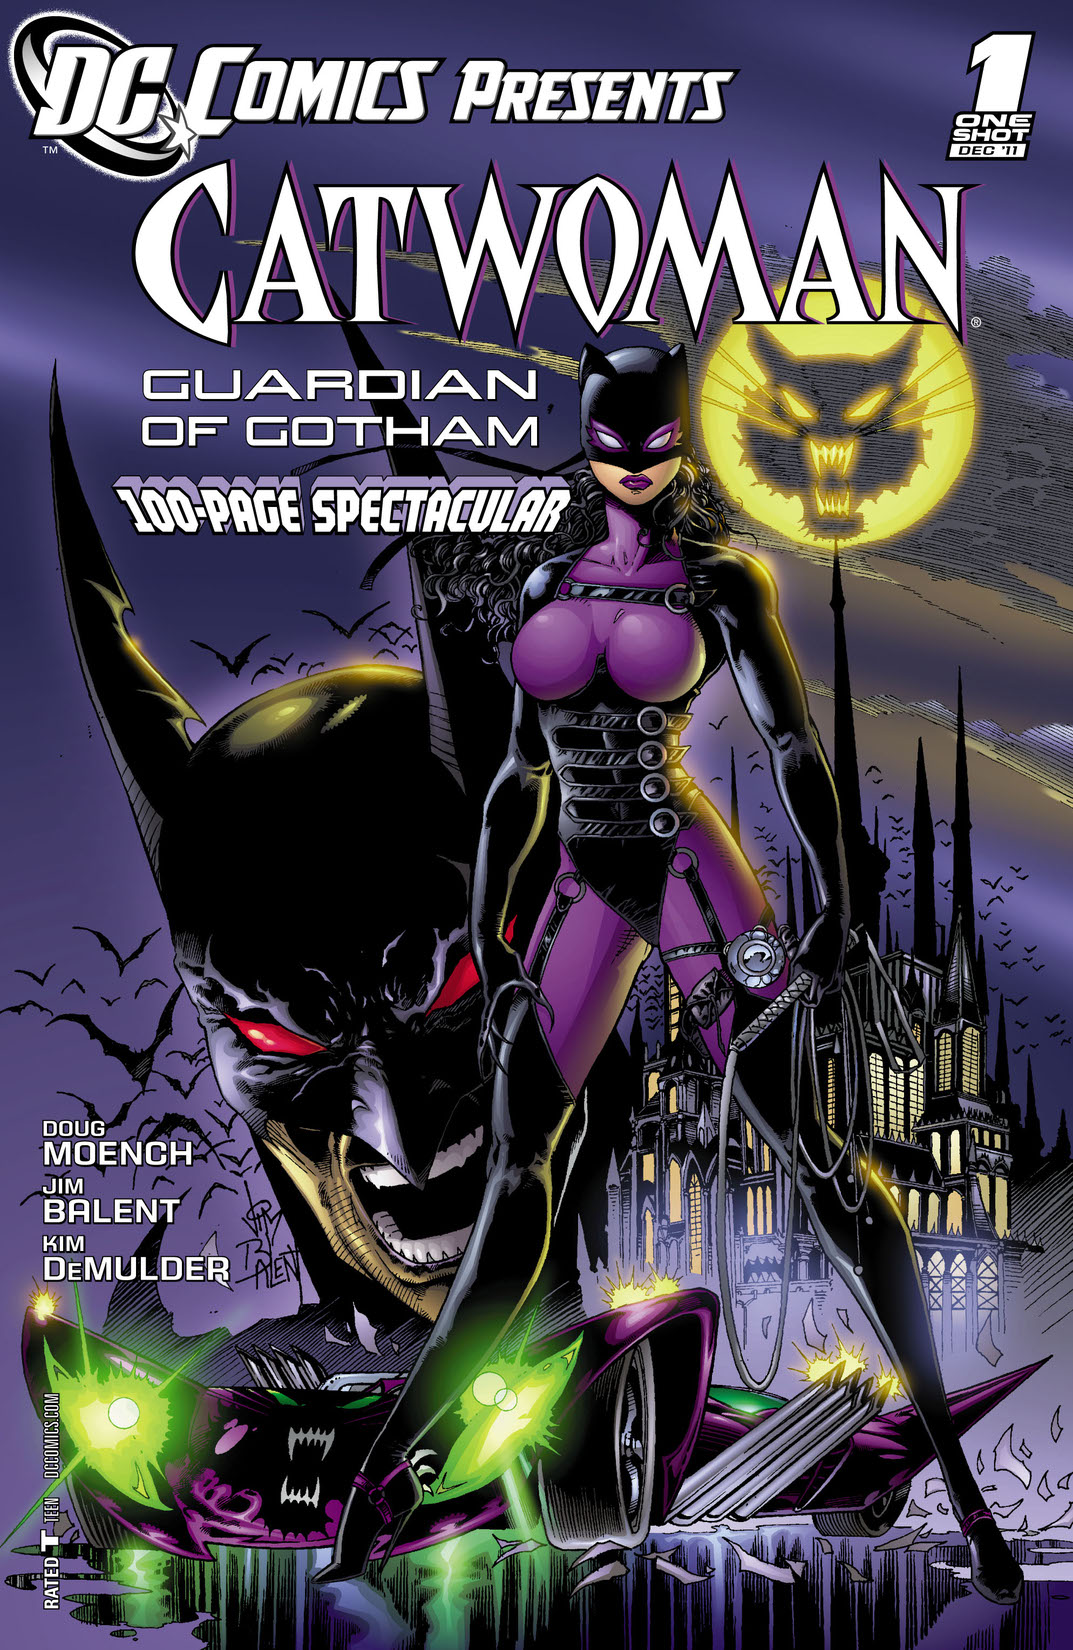 DC Comics Presents: Catwoman - Guardian of Gotham (2011-) #1 preview images